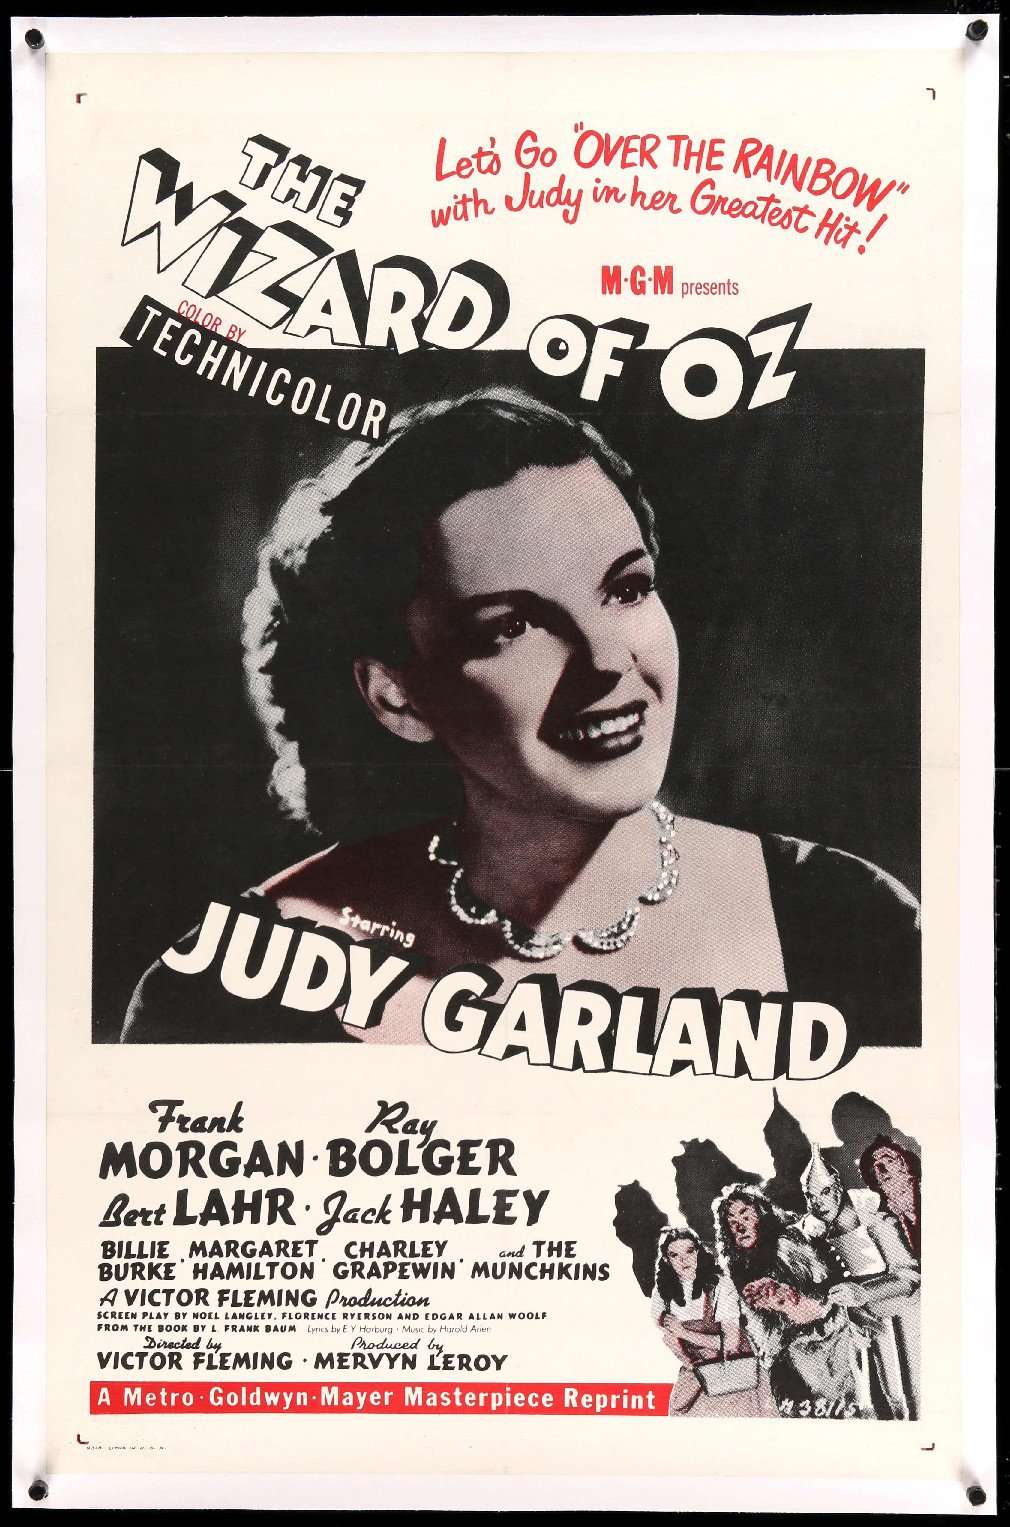 Wizard of Oz (1939) original movie poster for sale at Original Film Art